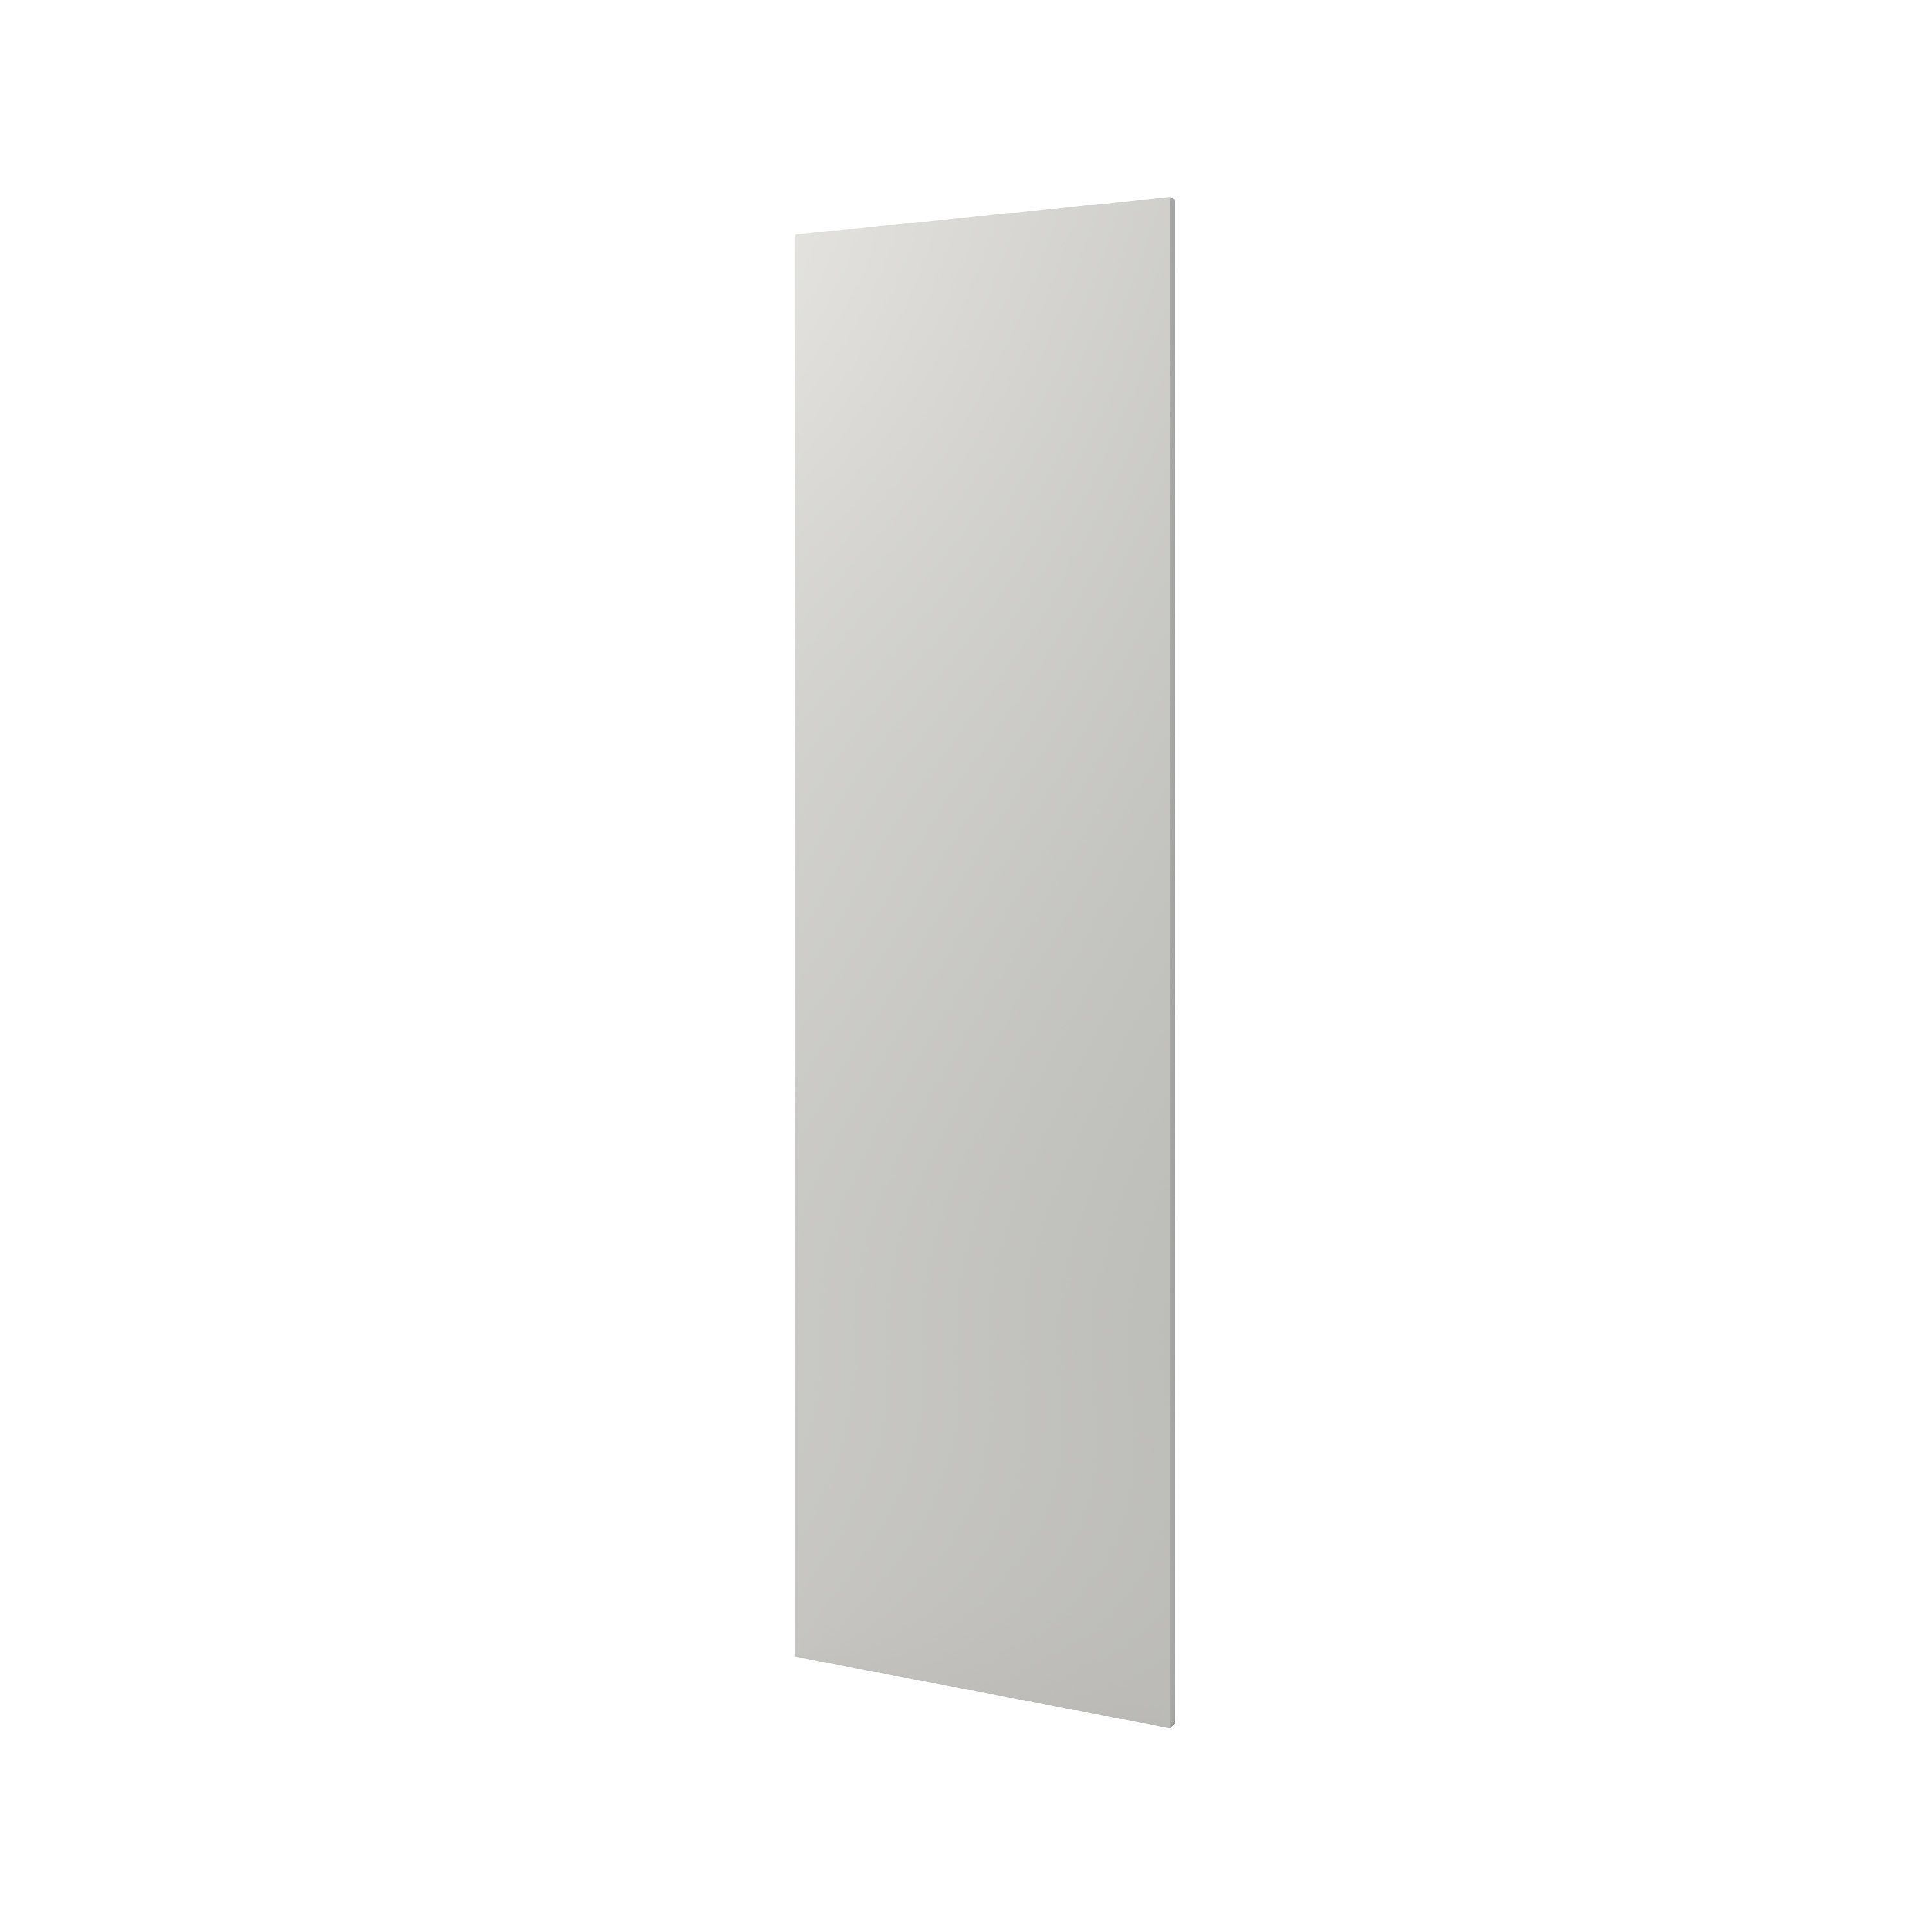 GoodHome Garcinia Matt stone integrated handle shaker Standard End panel (H)2010mm (W)570mm, Pair